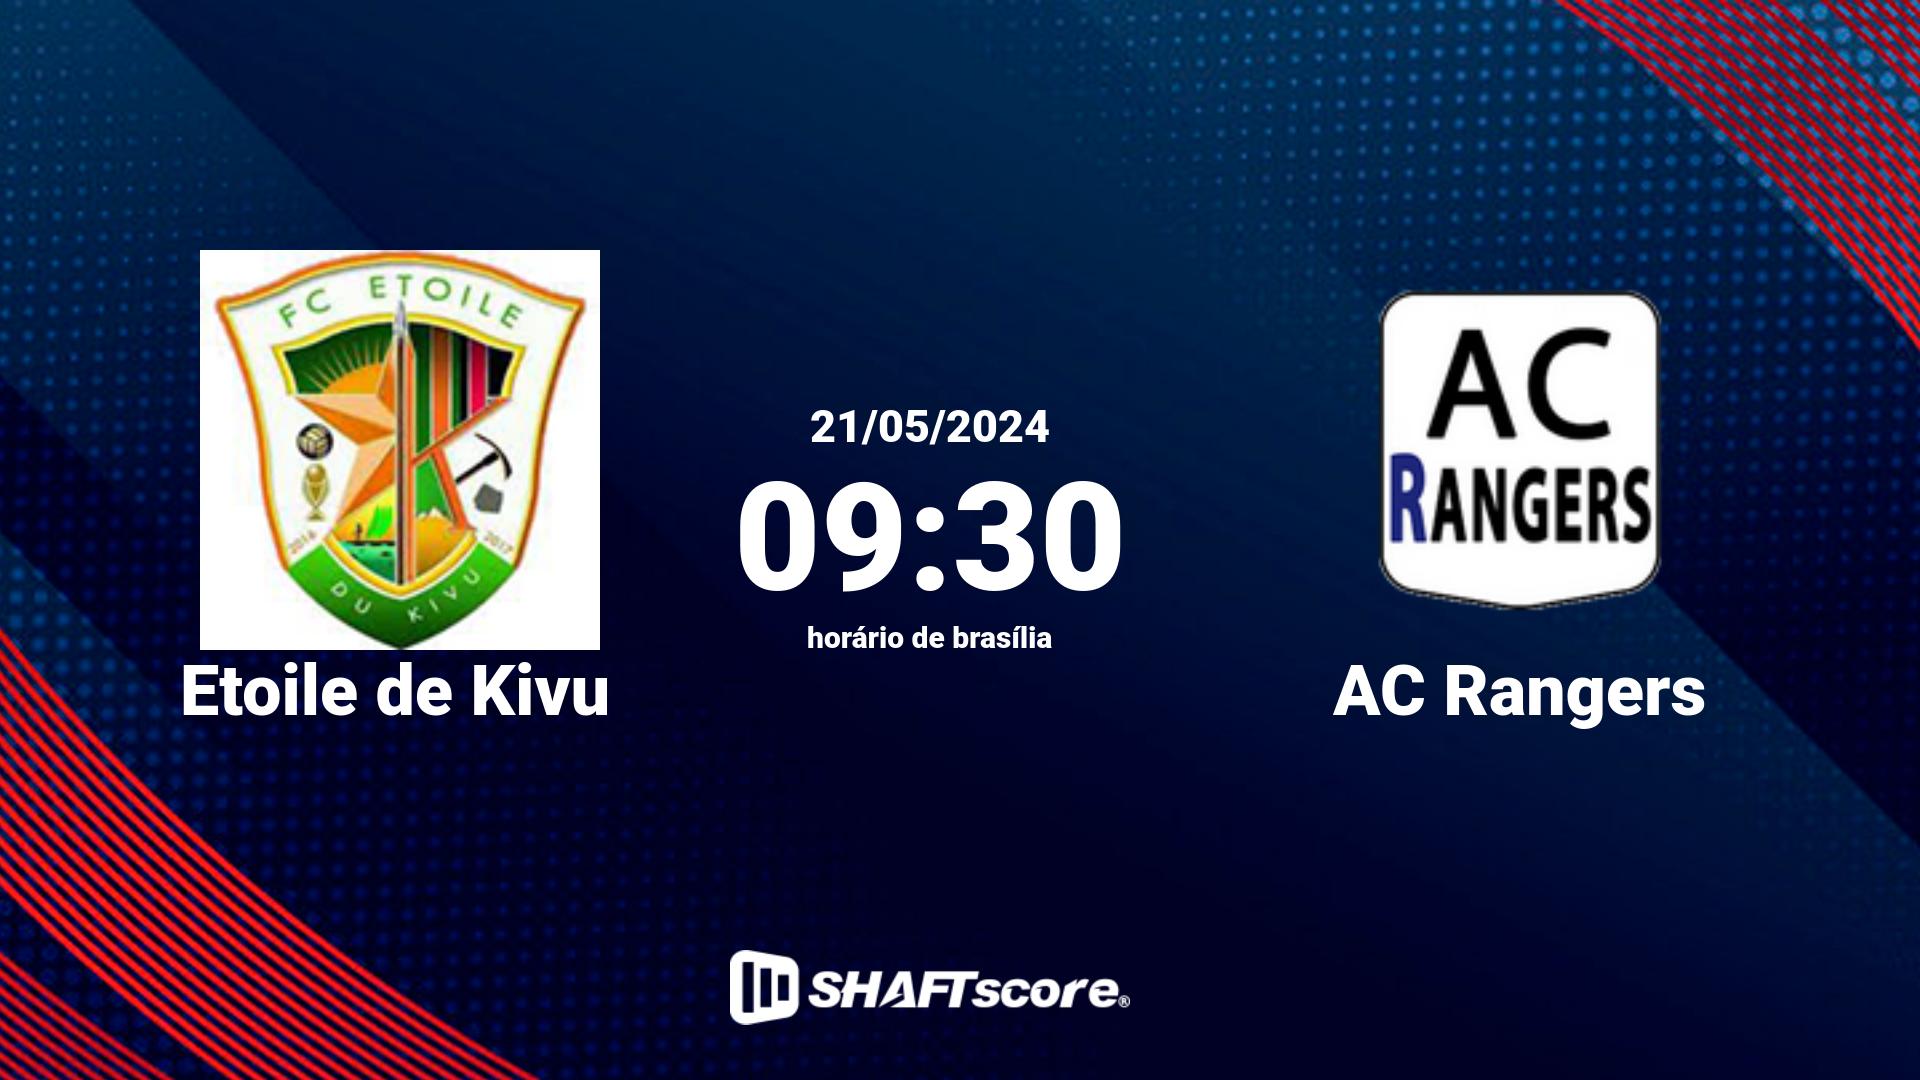 Estatísticas do jogo Etoile de Kivu vs AC Rangers 27.04 09:30